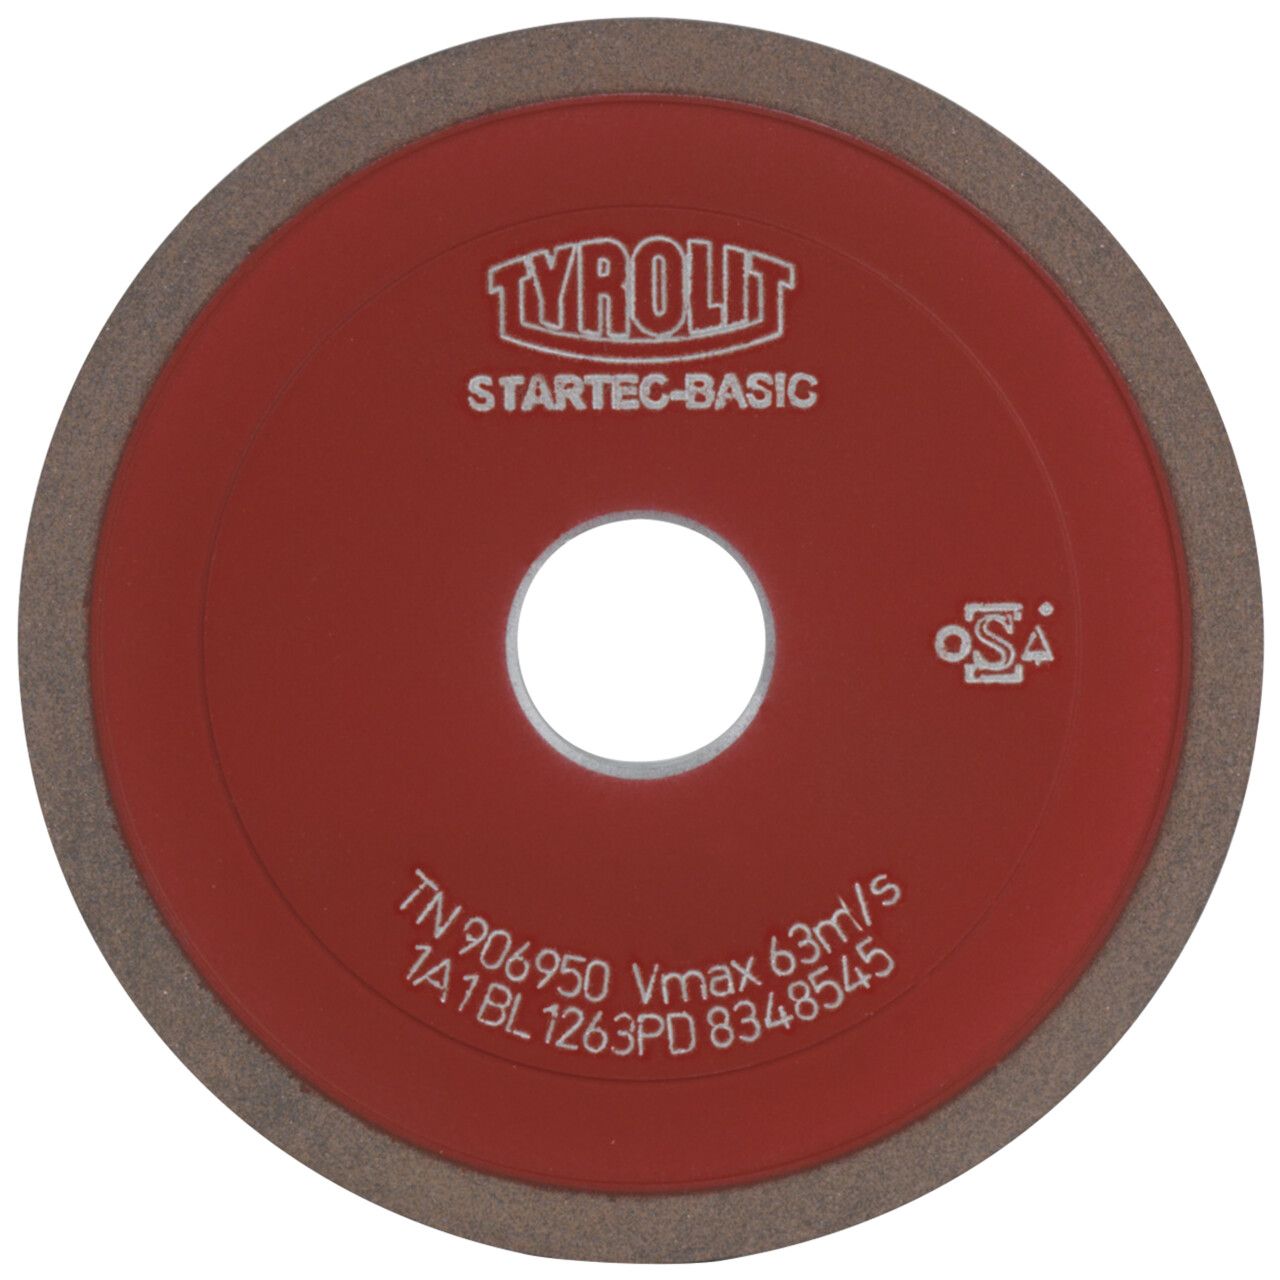 Tyrolit muelas de precisión #1A1 100x10x20 BL126-3-PD STARTEC-BASIC